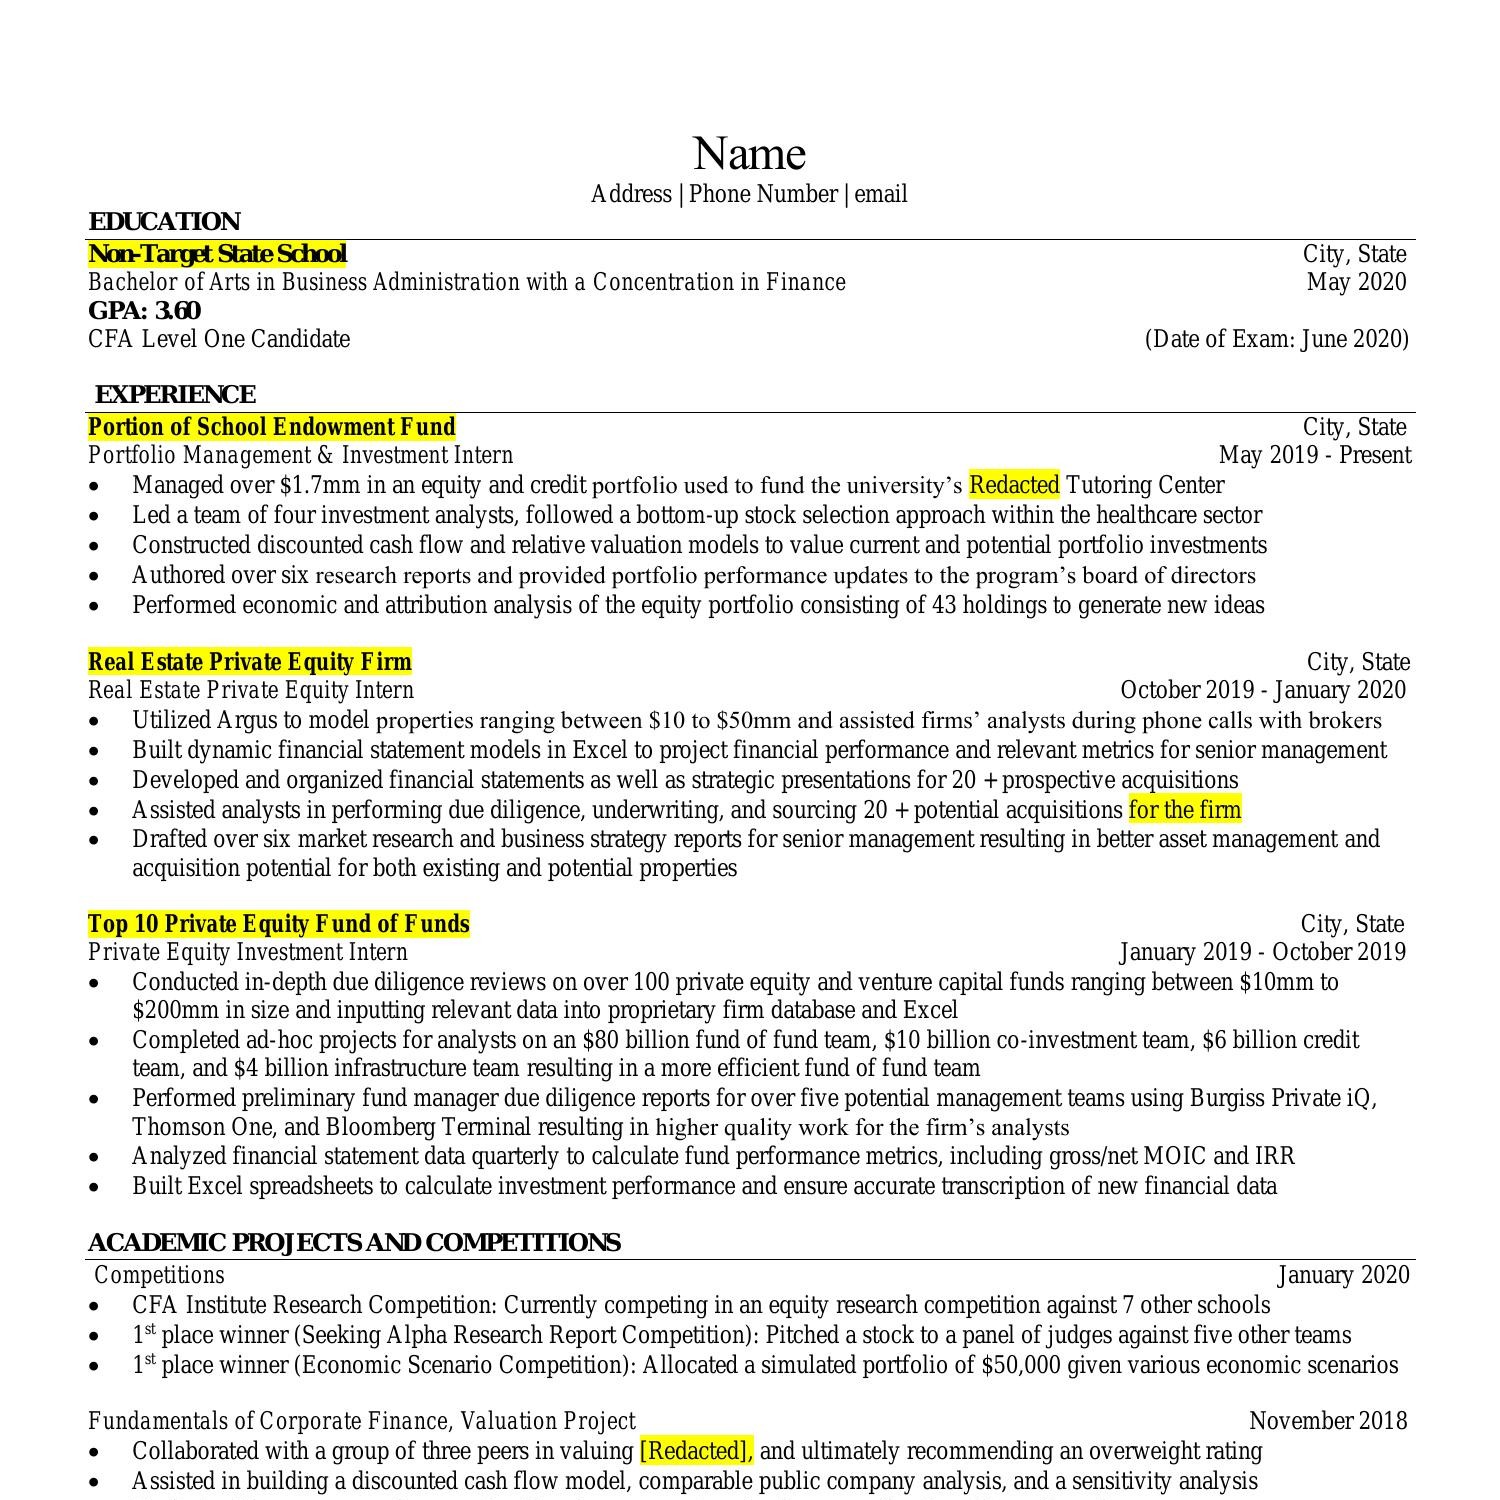 best resume templates 2020